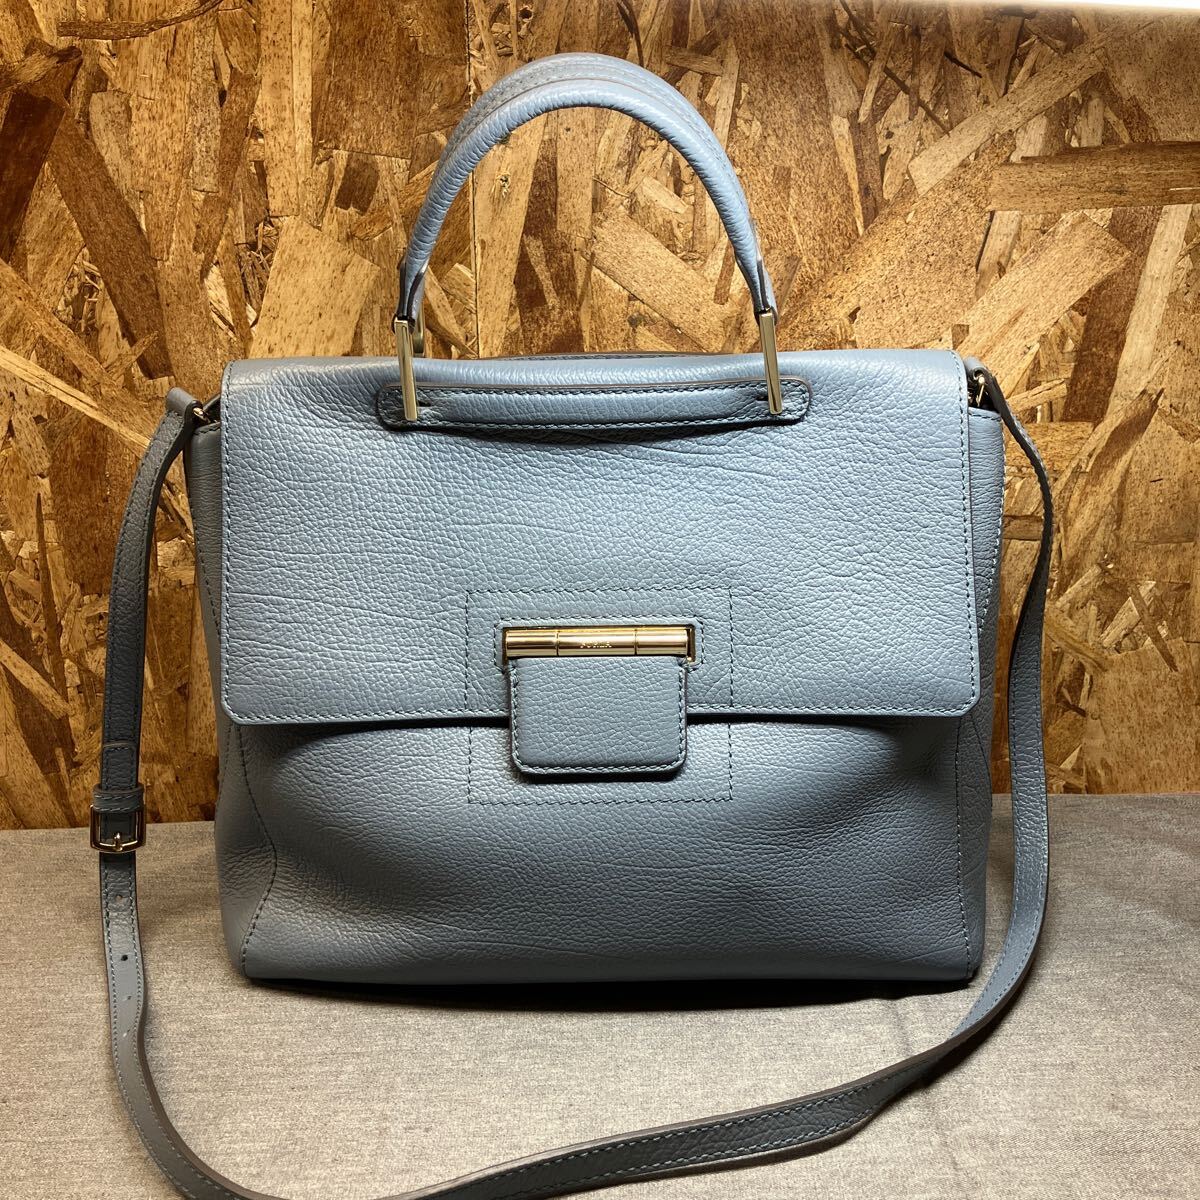  free shipping [N.1269]FURLA Furla arte -sia2way bag pale blue handbag leather shoulder bag bag 